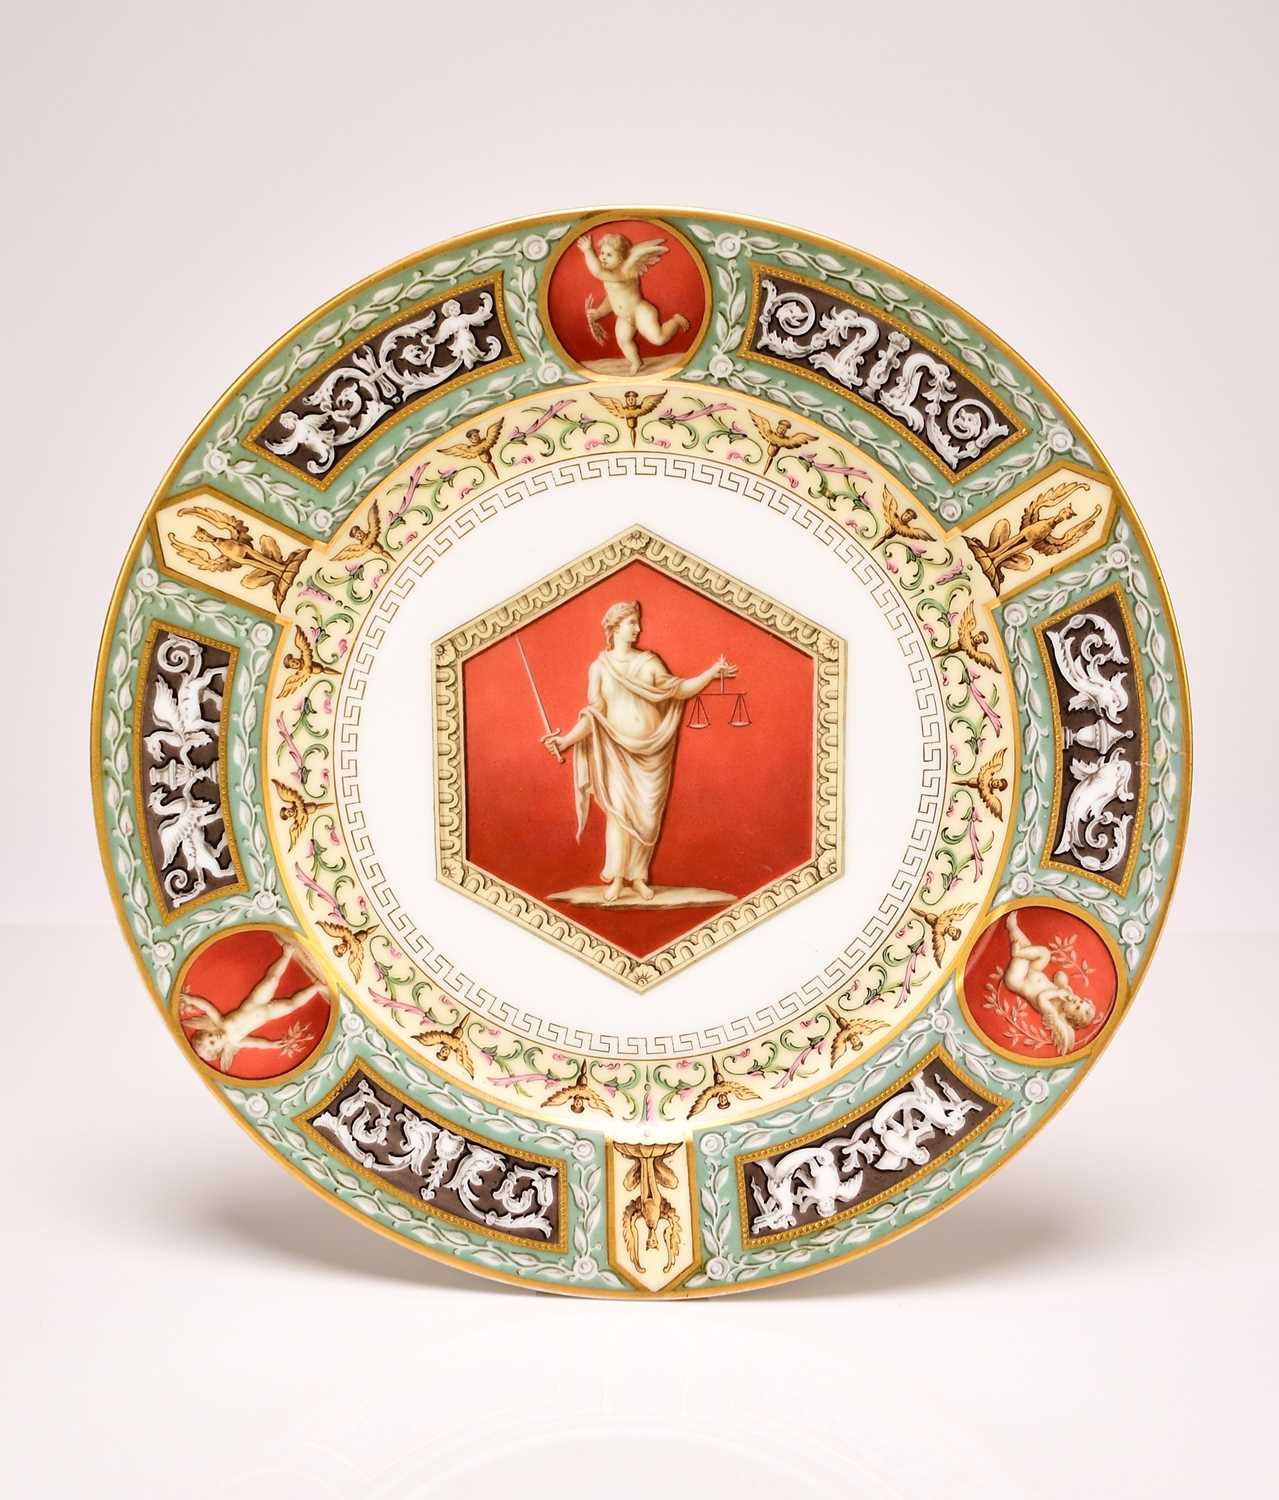 Lot 242 - Imperial Porcelain Manufactory 'Raphael Service' plate, Alexander III